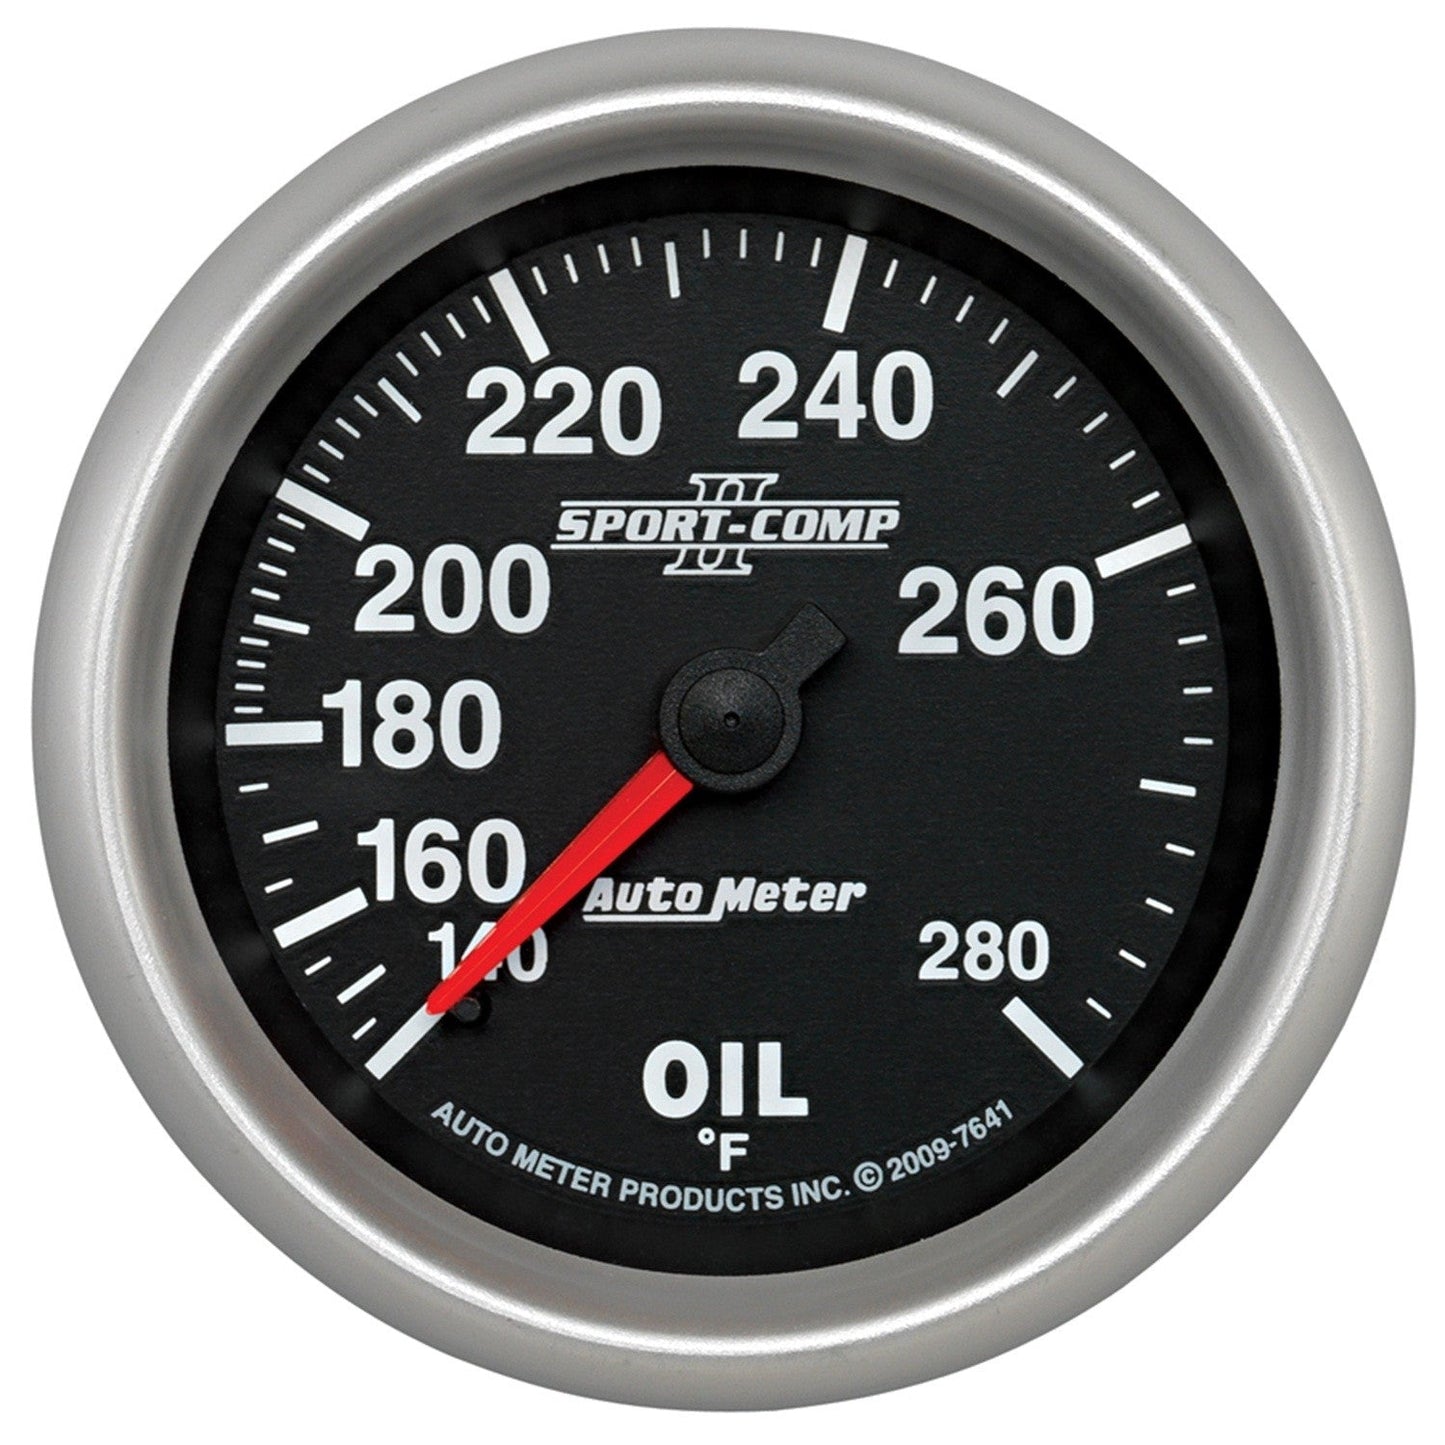 AutoMeter - 2-5/8" OIL TEMPERATURE, 140-280 °F, 6 FT., MECHANICAL, SPORT-COMP II (7641)